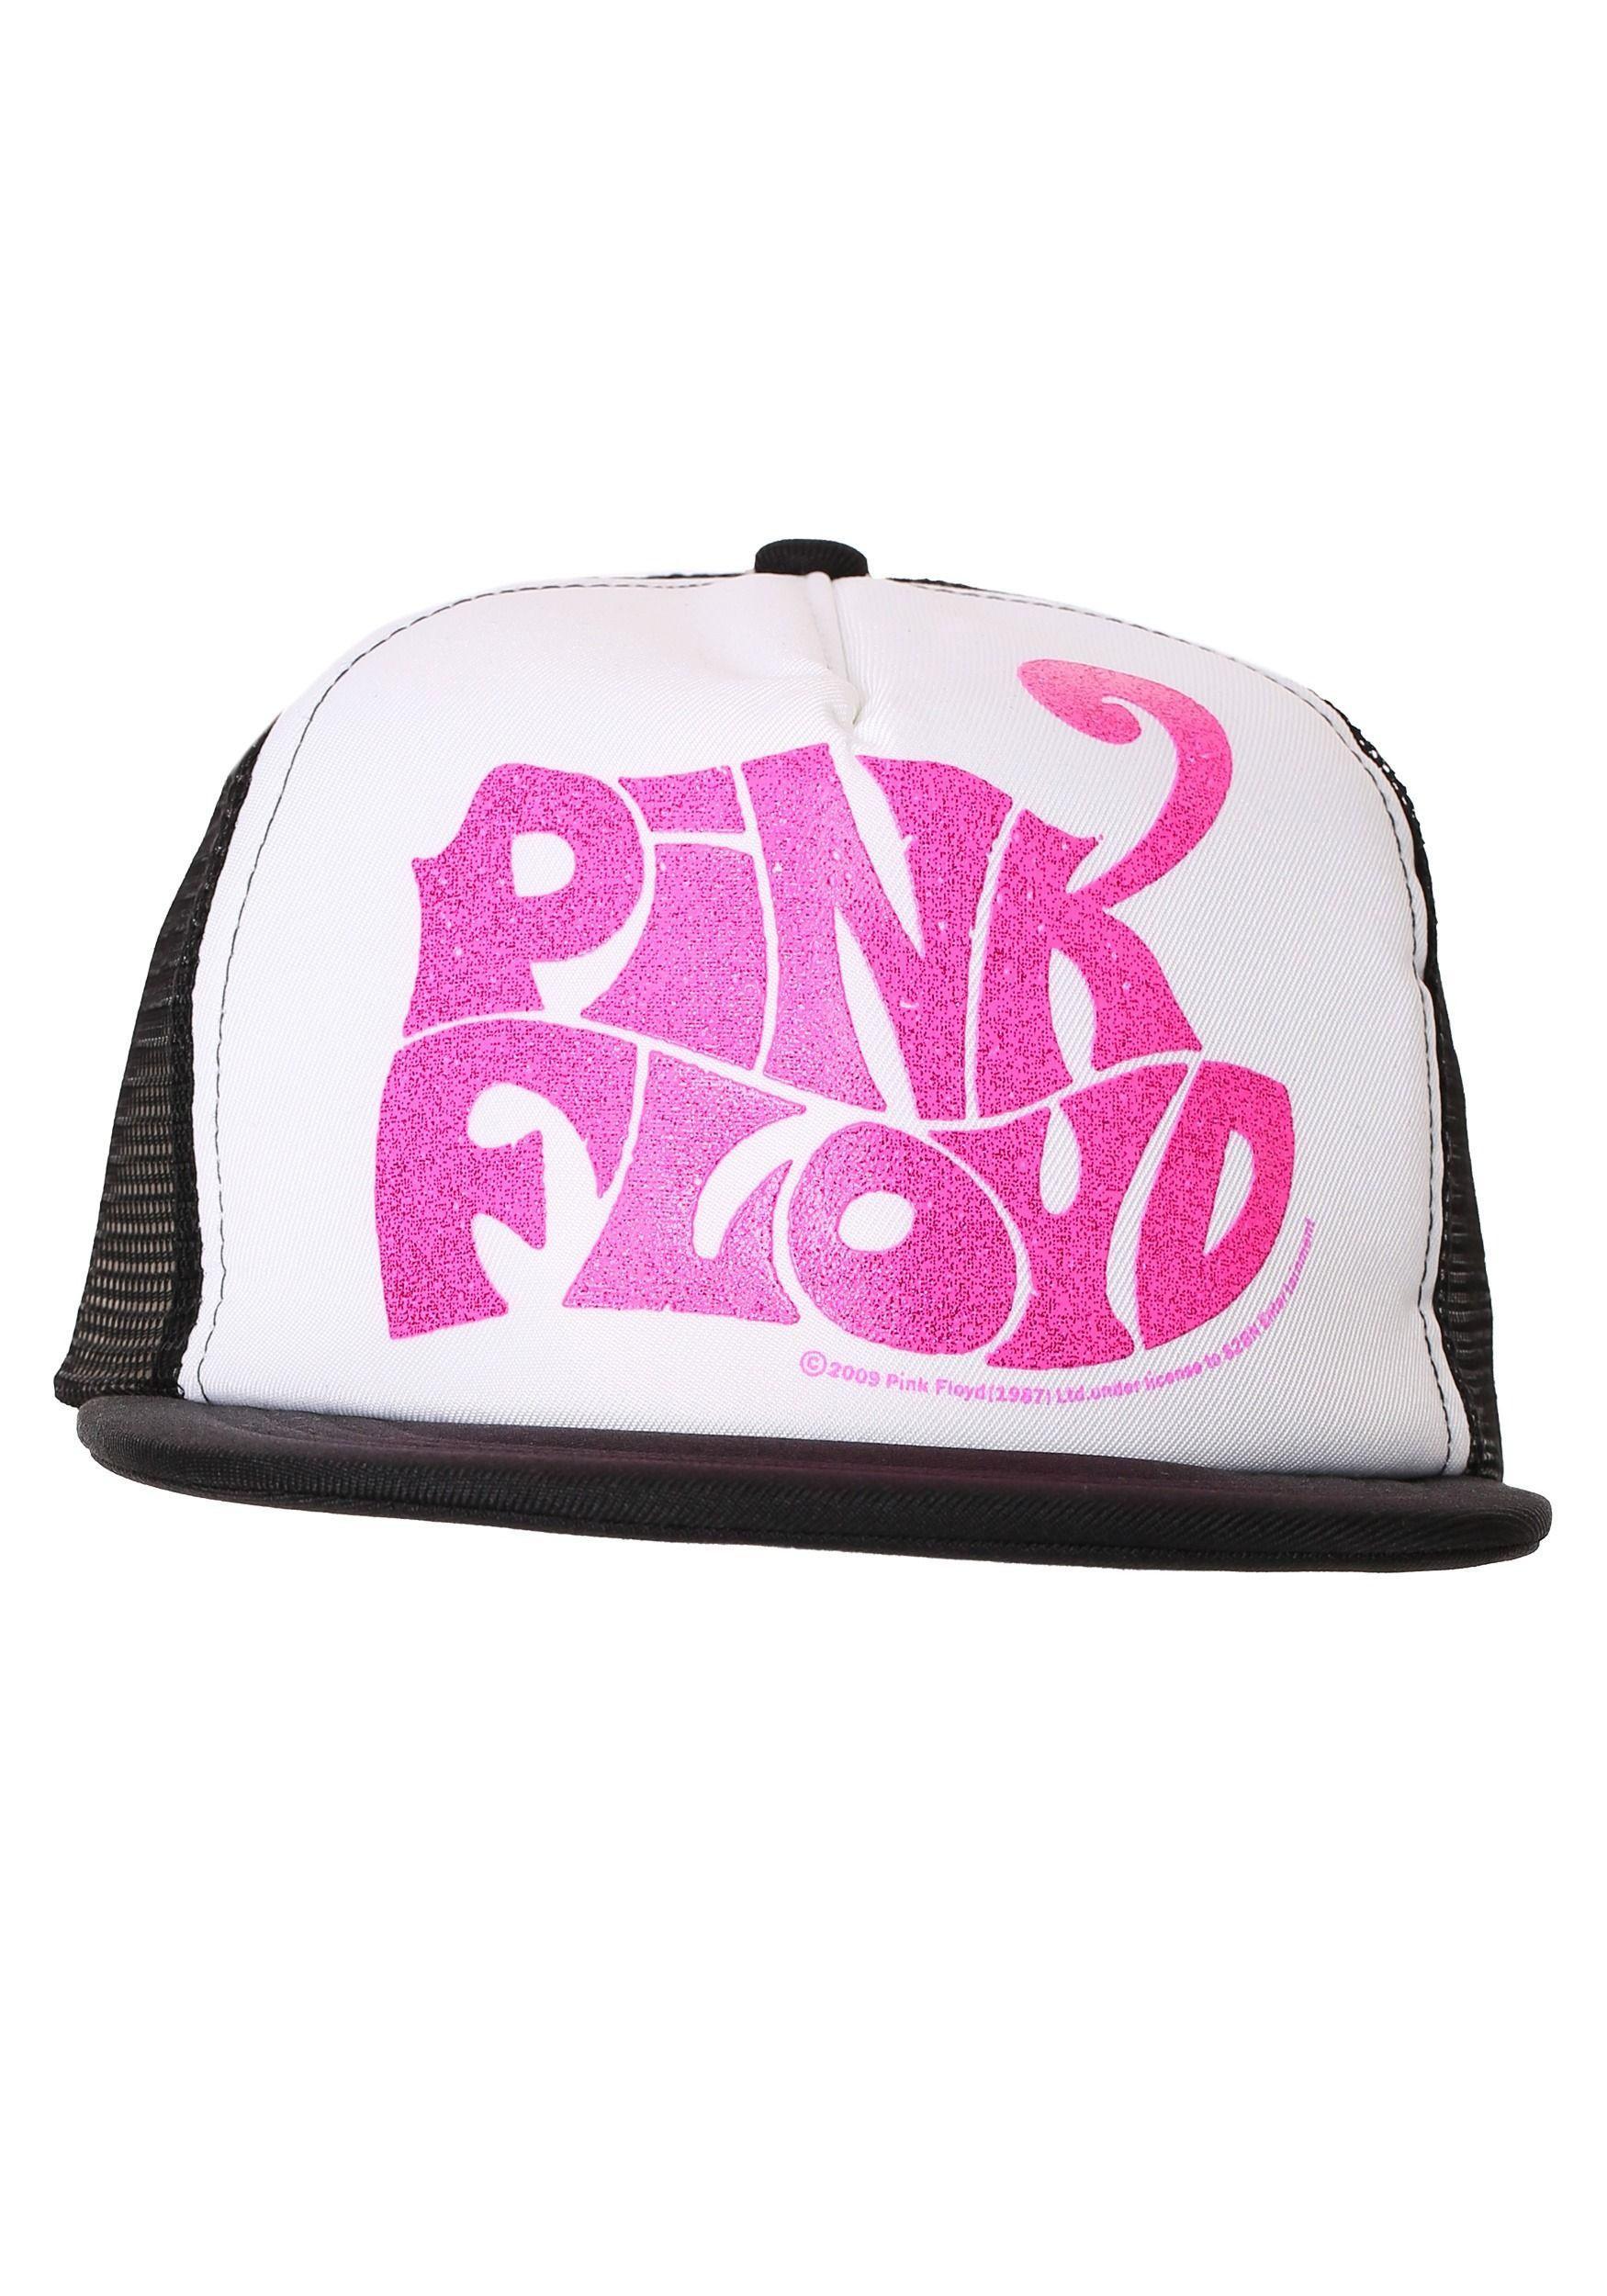 Pink Glitter Logo - Pink Glitter Pink Floyd Logo Mesh Back Trucker Hat